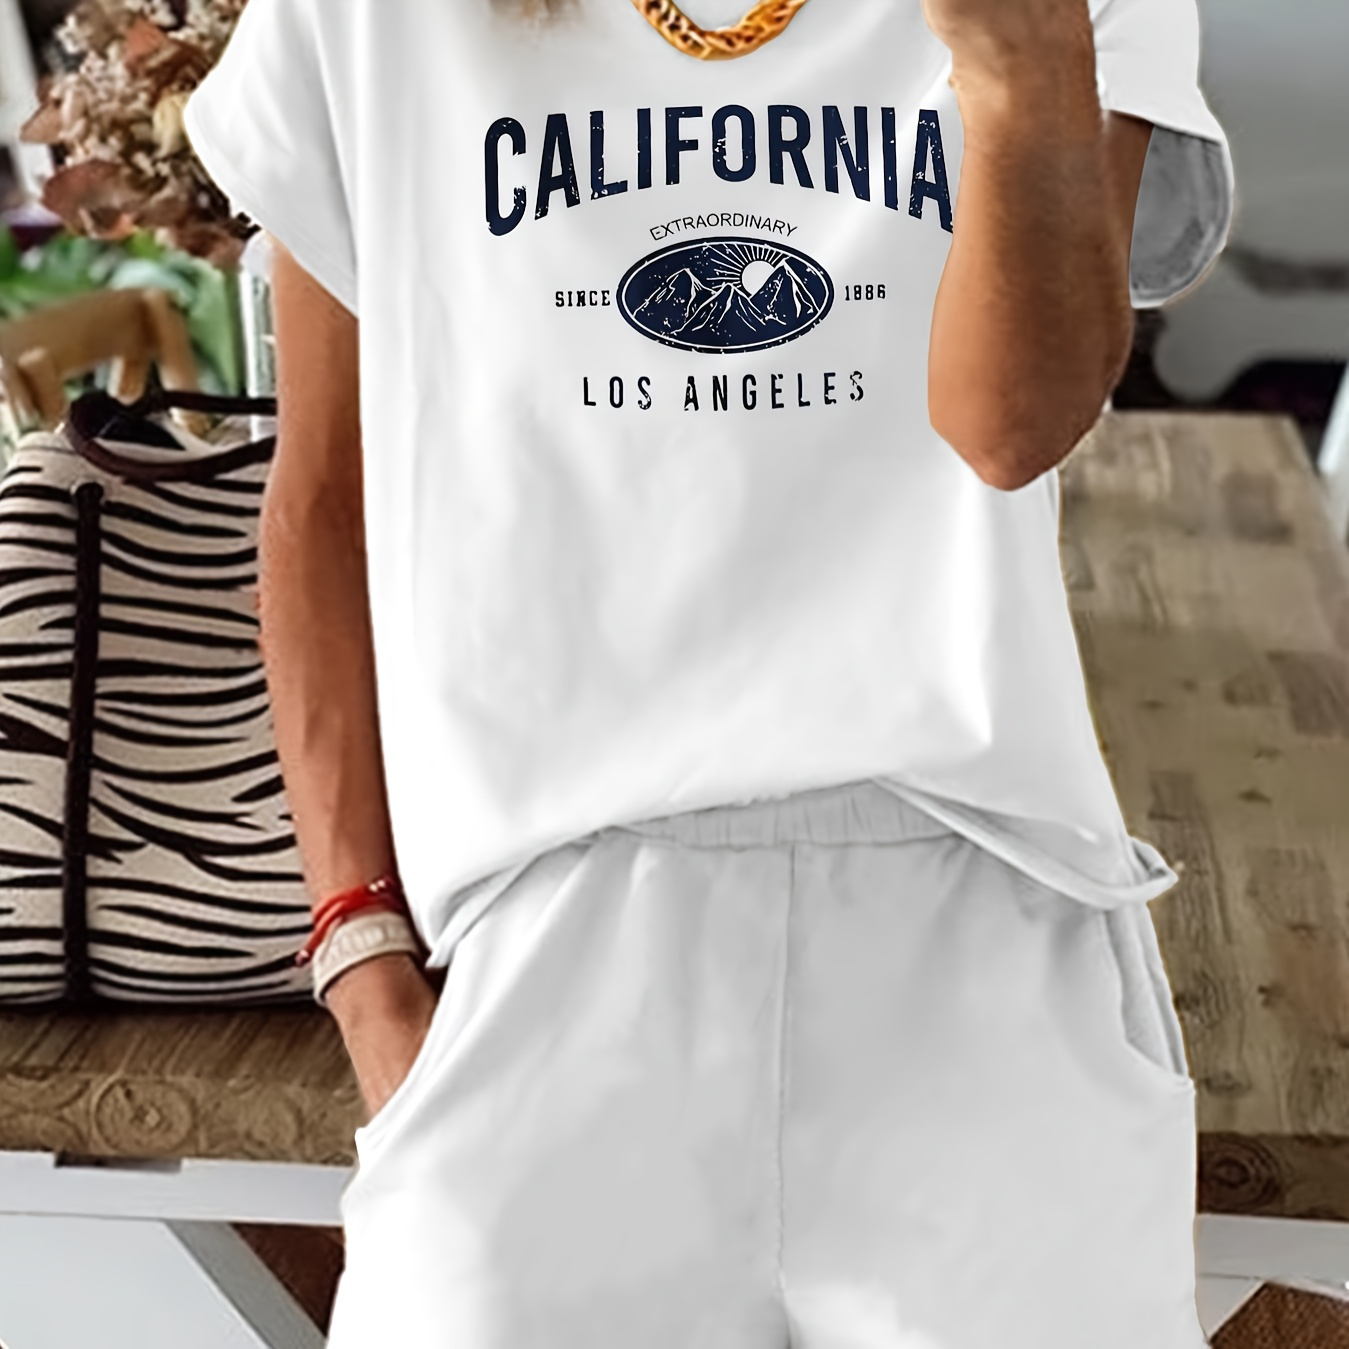 

California Print 2 Piece Set, Short Sleeve Crew Neck T-shirt & Elastic Waist Slant Pocket Shorts Outfits, Women's Clothing